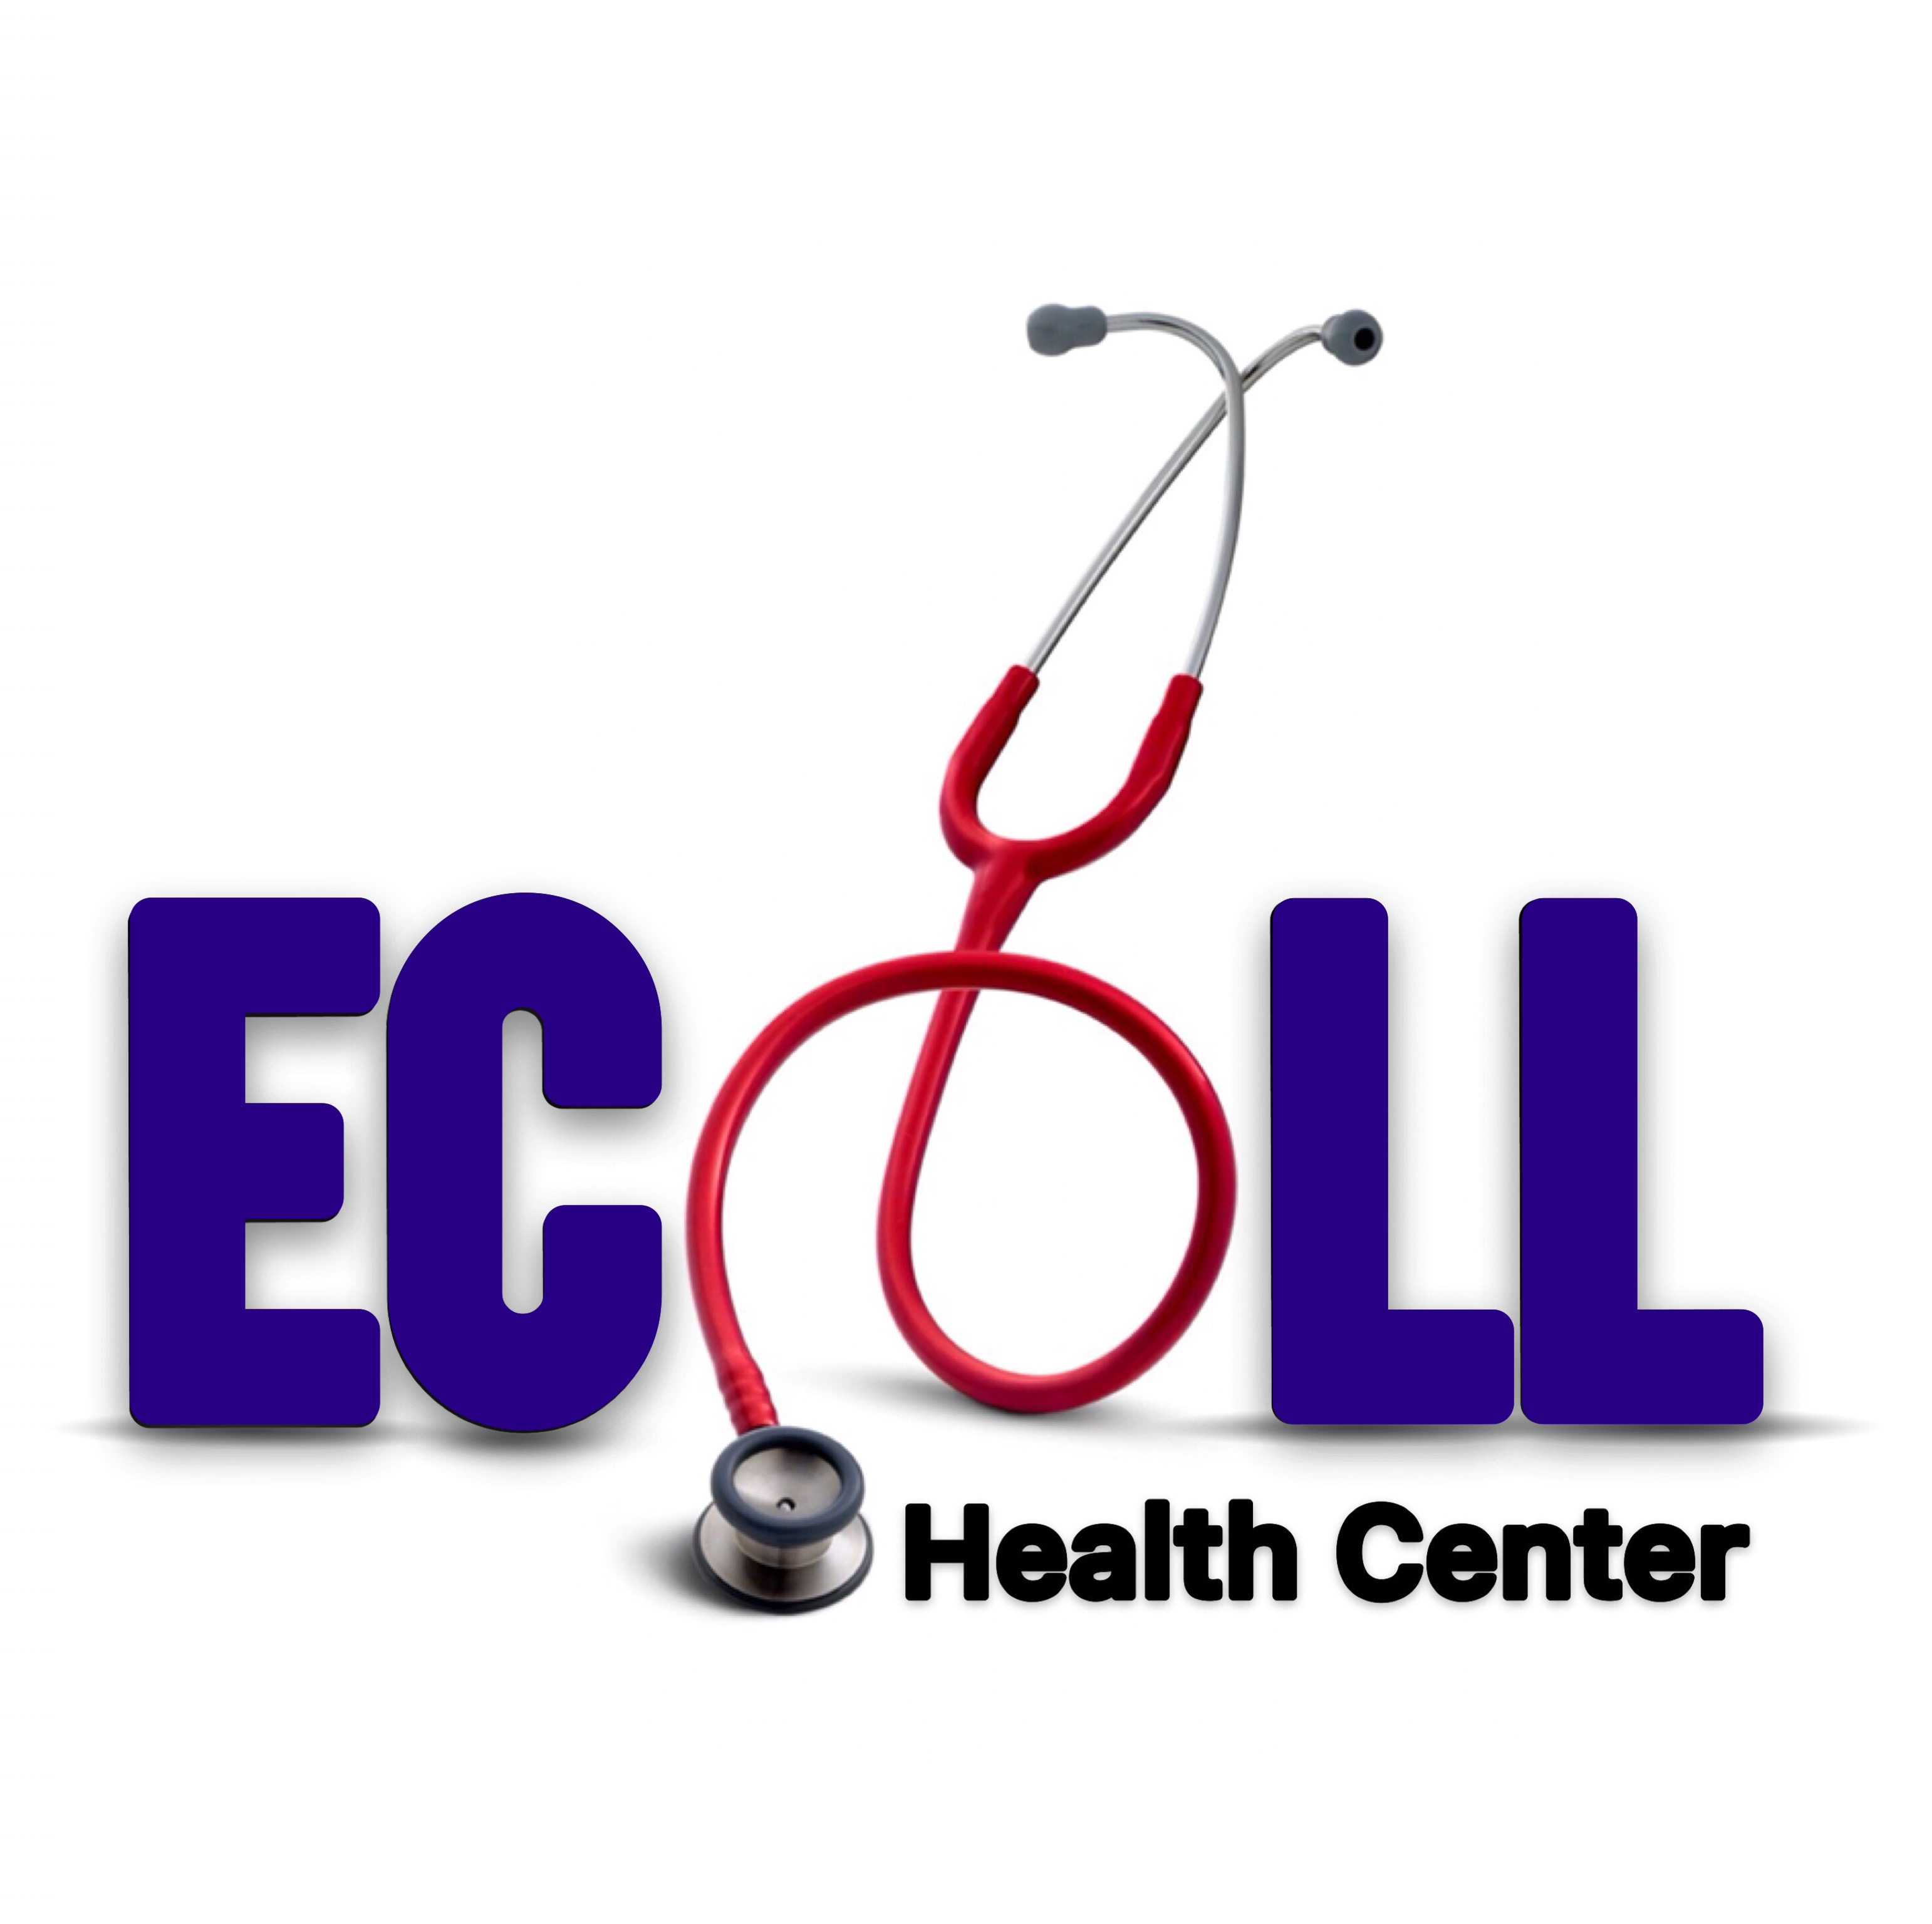 Ecall Health Center